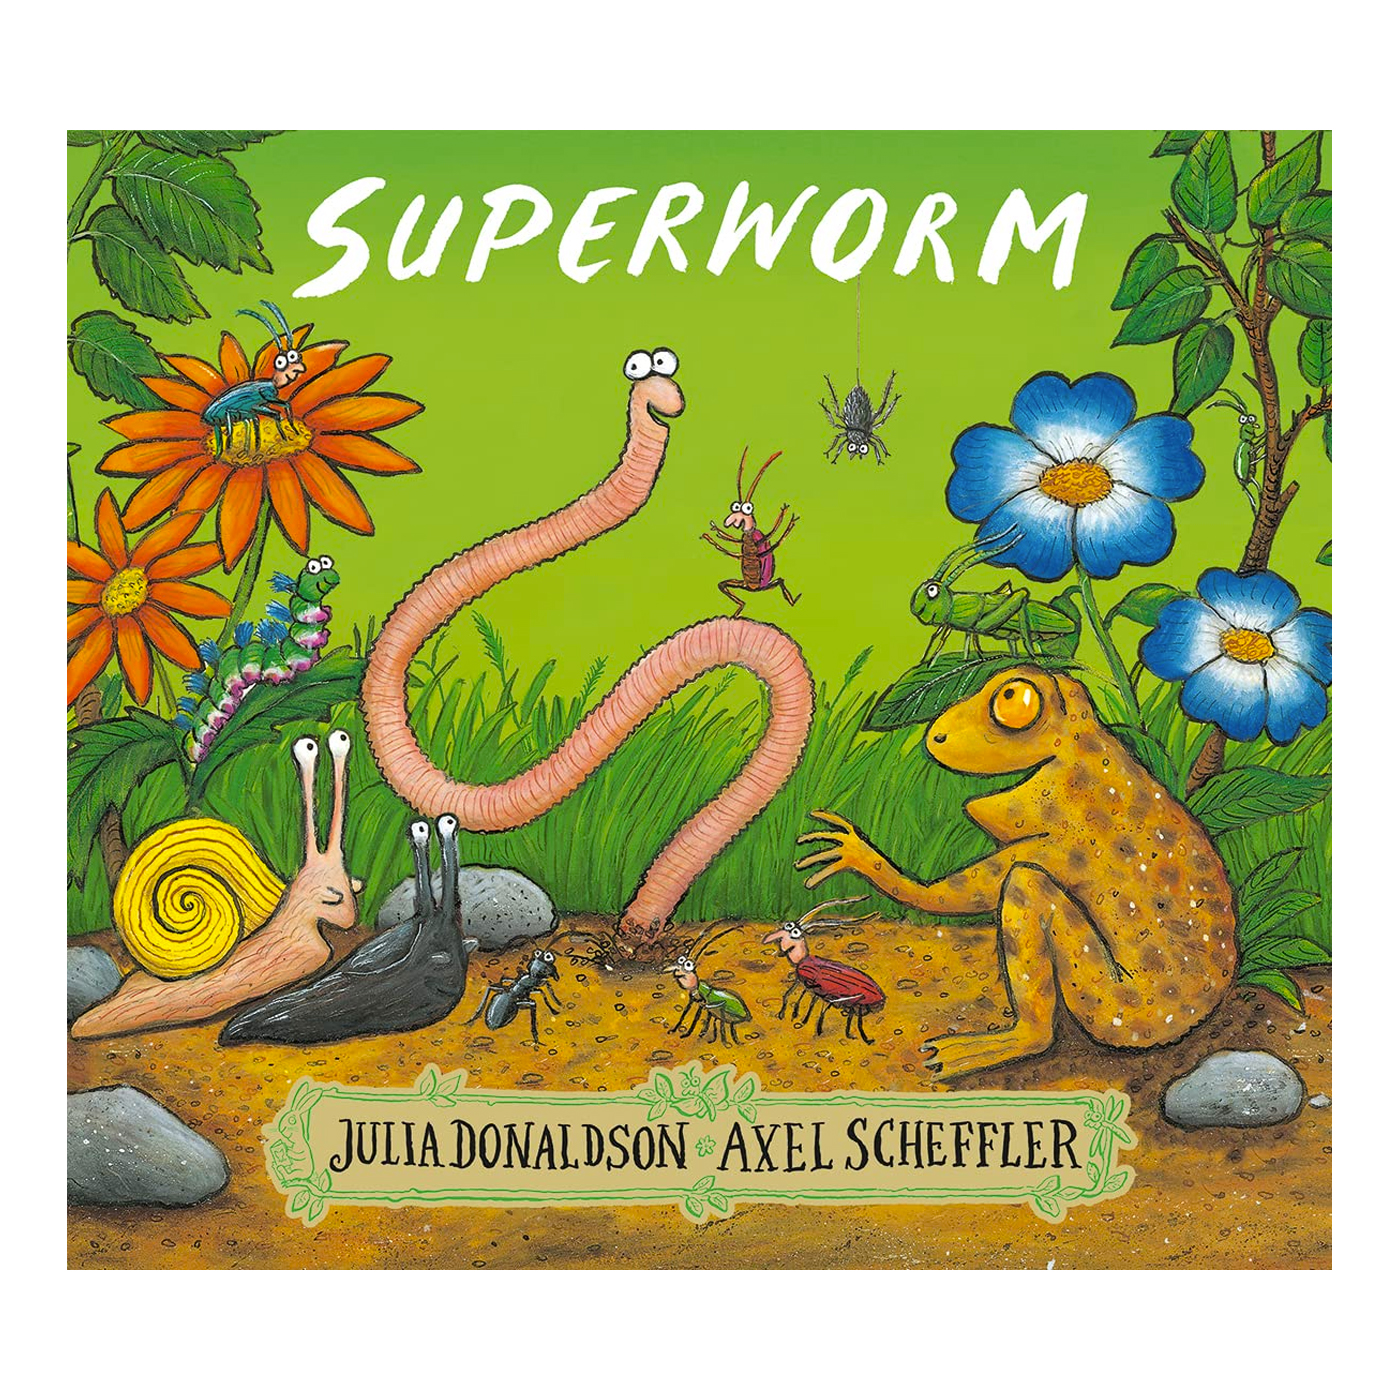  Superworm